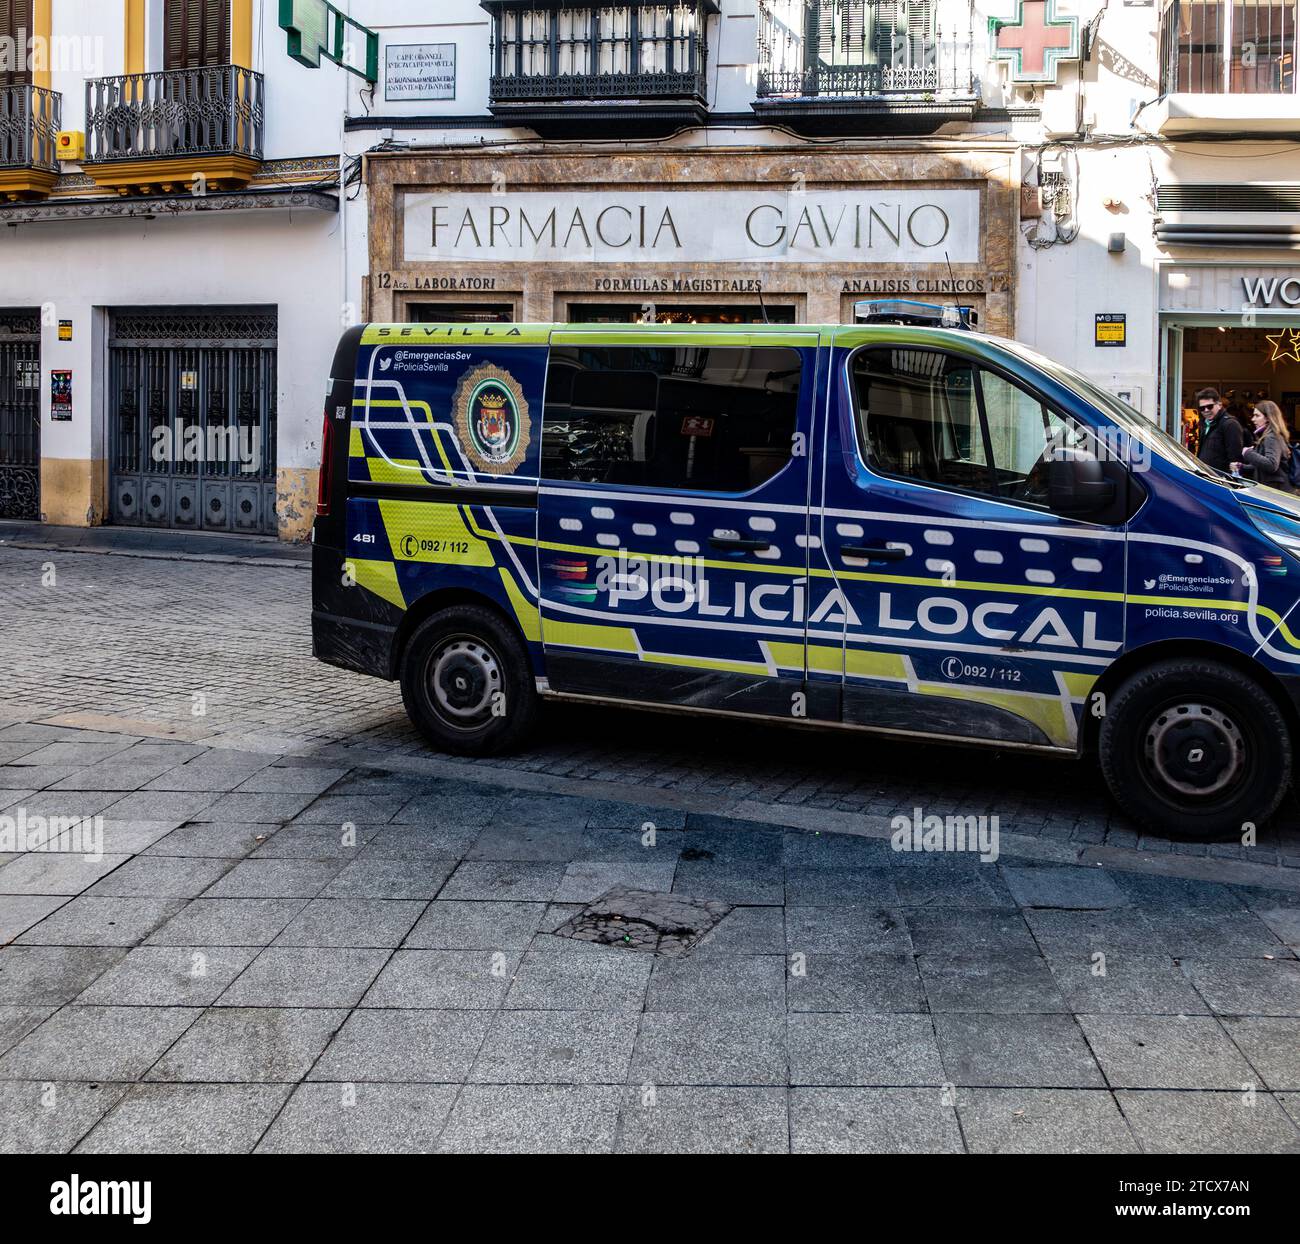 Policia Local, Police patrol van, on the street in Seville, Spain. Stock Photo